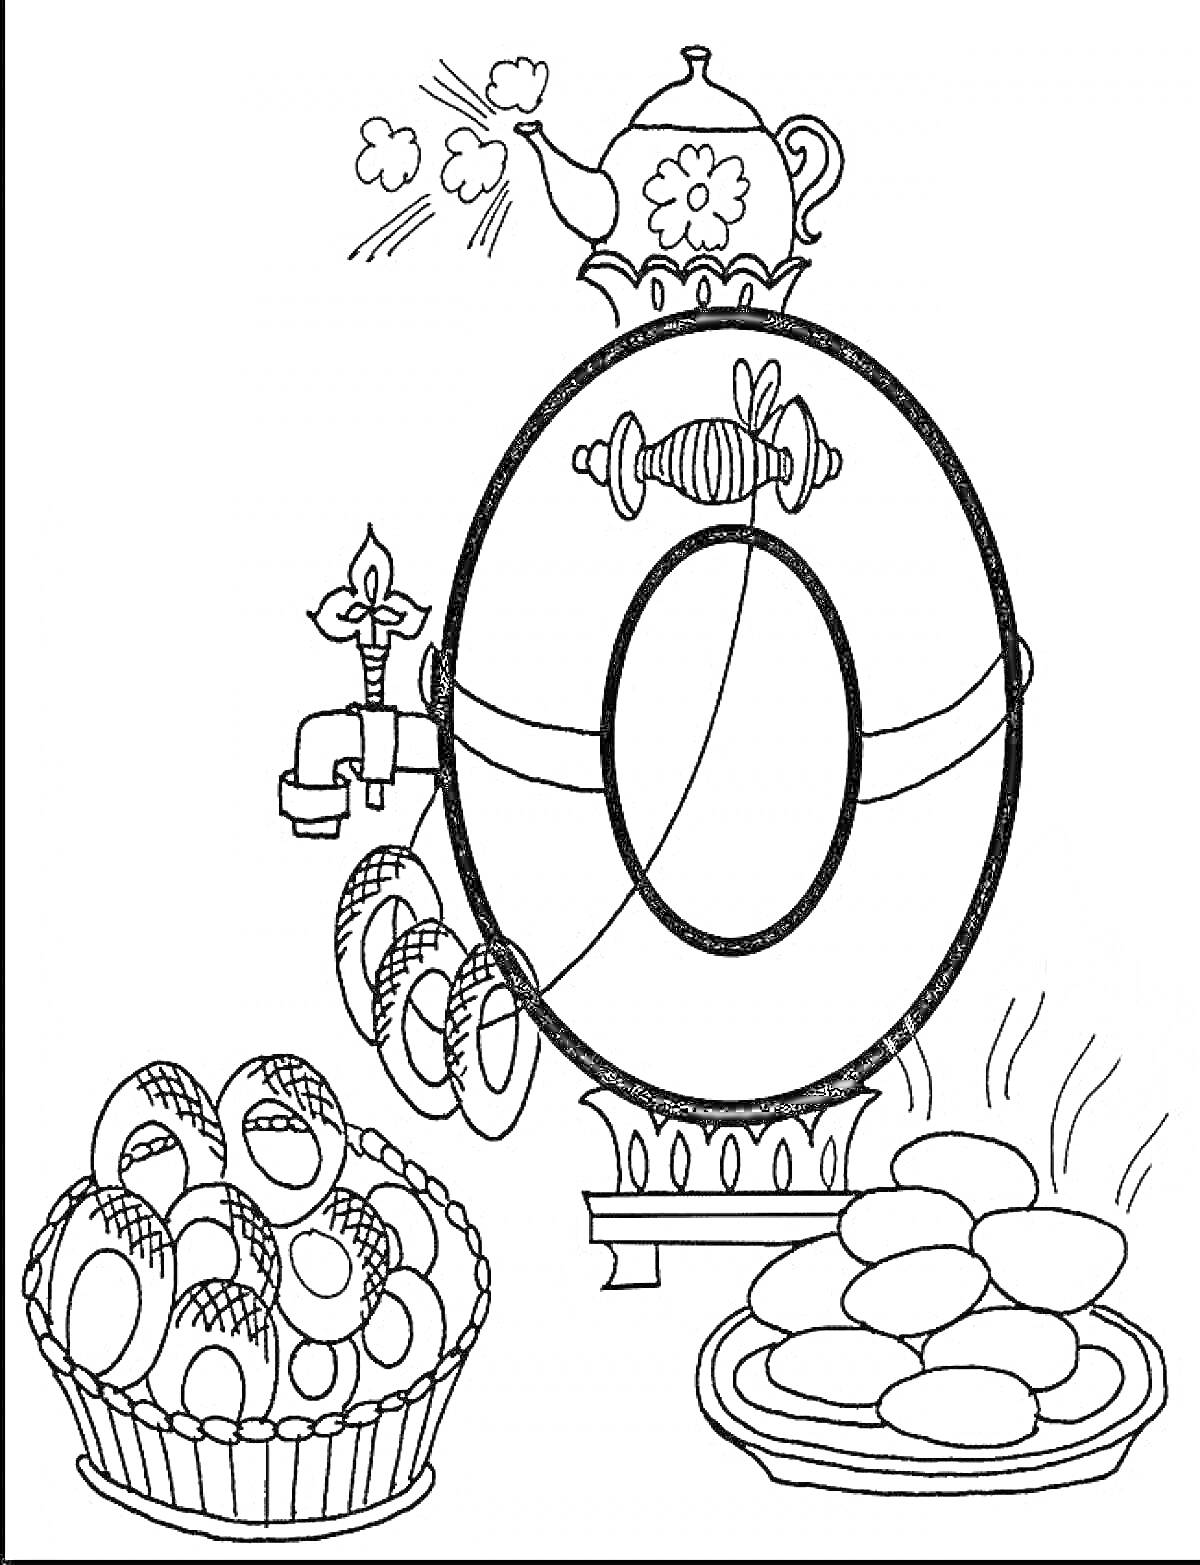 На раскраске изображено: Цифра 0, Самовар, Корзина, Яйца, Пар, Расцветка, Булочка